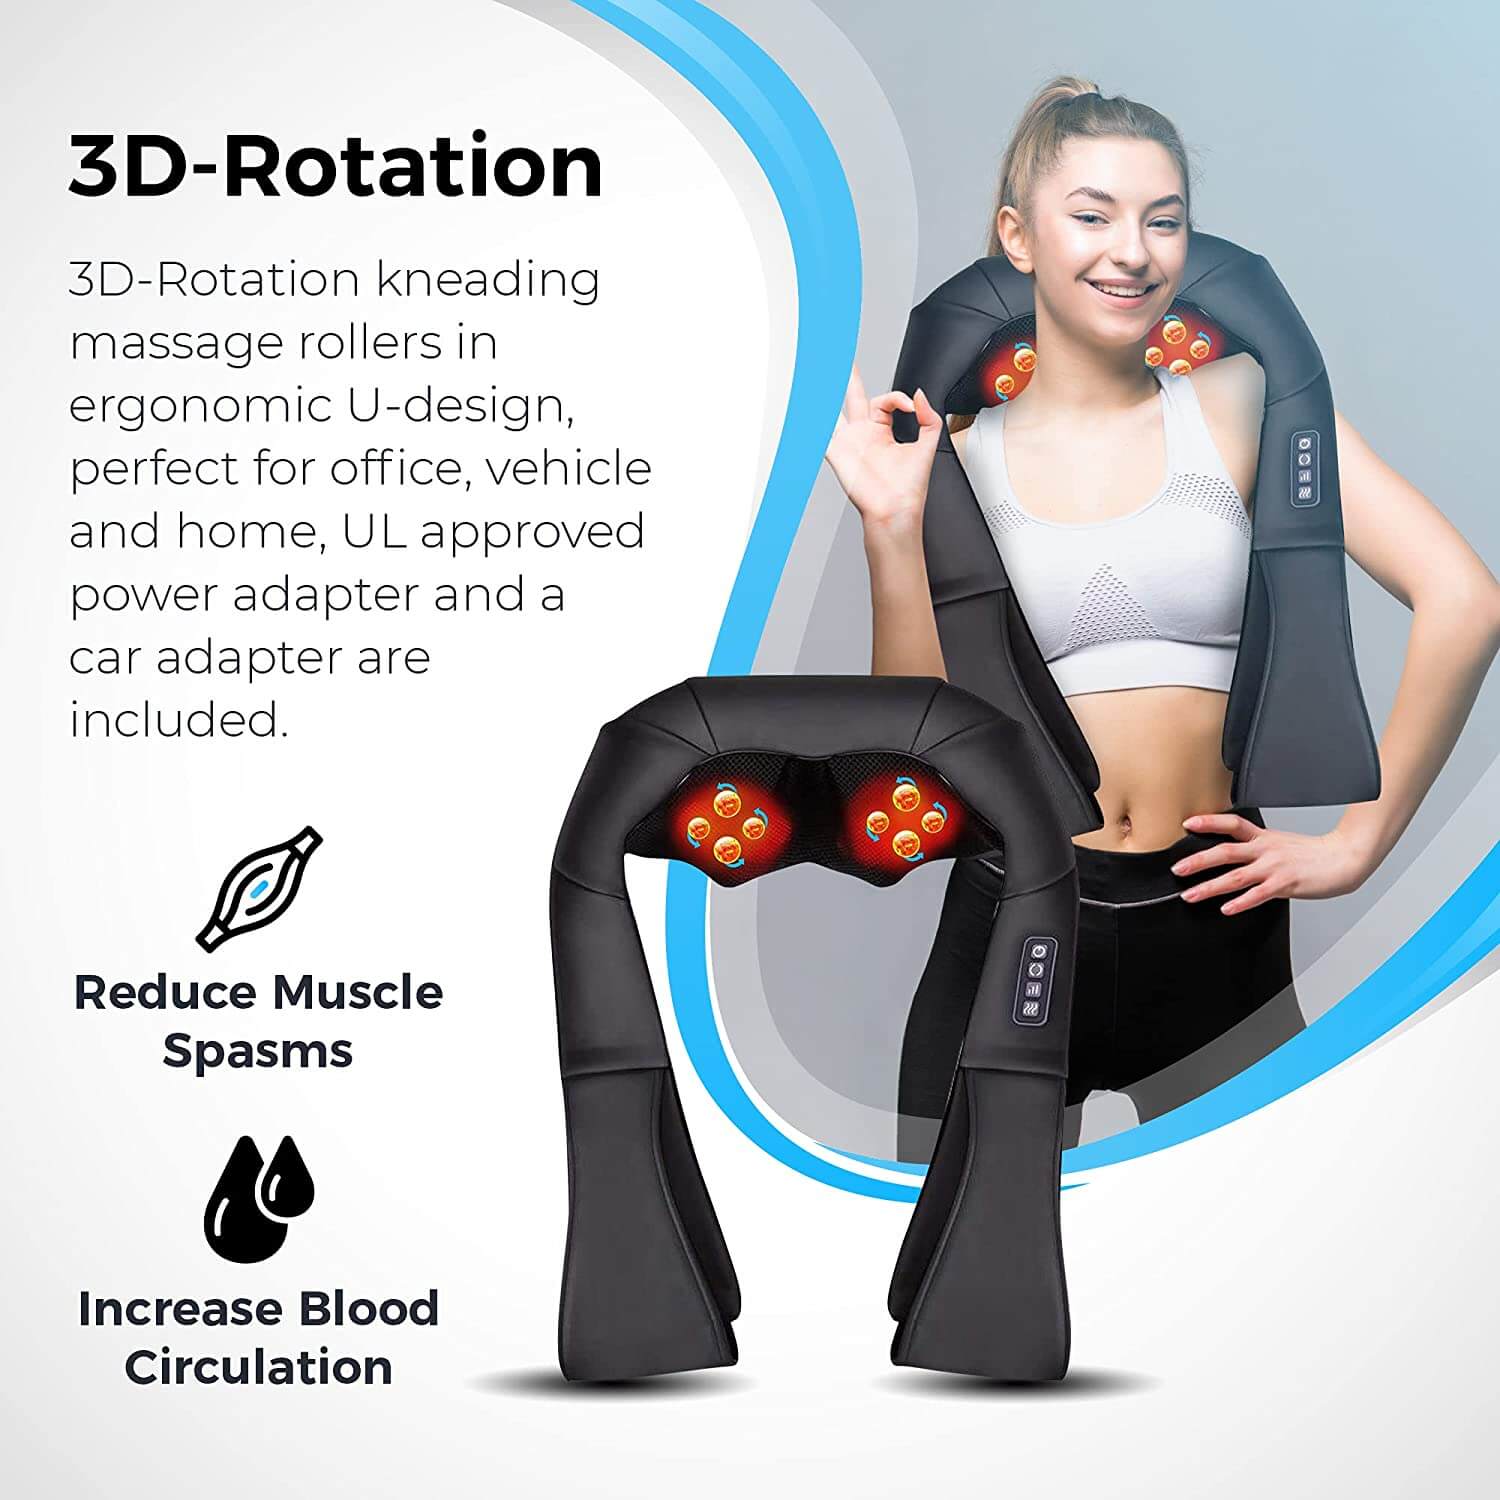 Shiatsu Neck and Back Shoulder Massager with Heat - Deep Tissue 3D Kneading  Massager